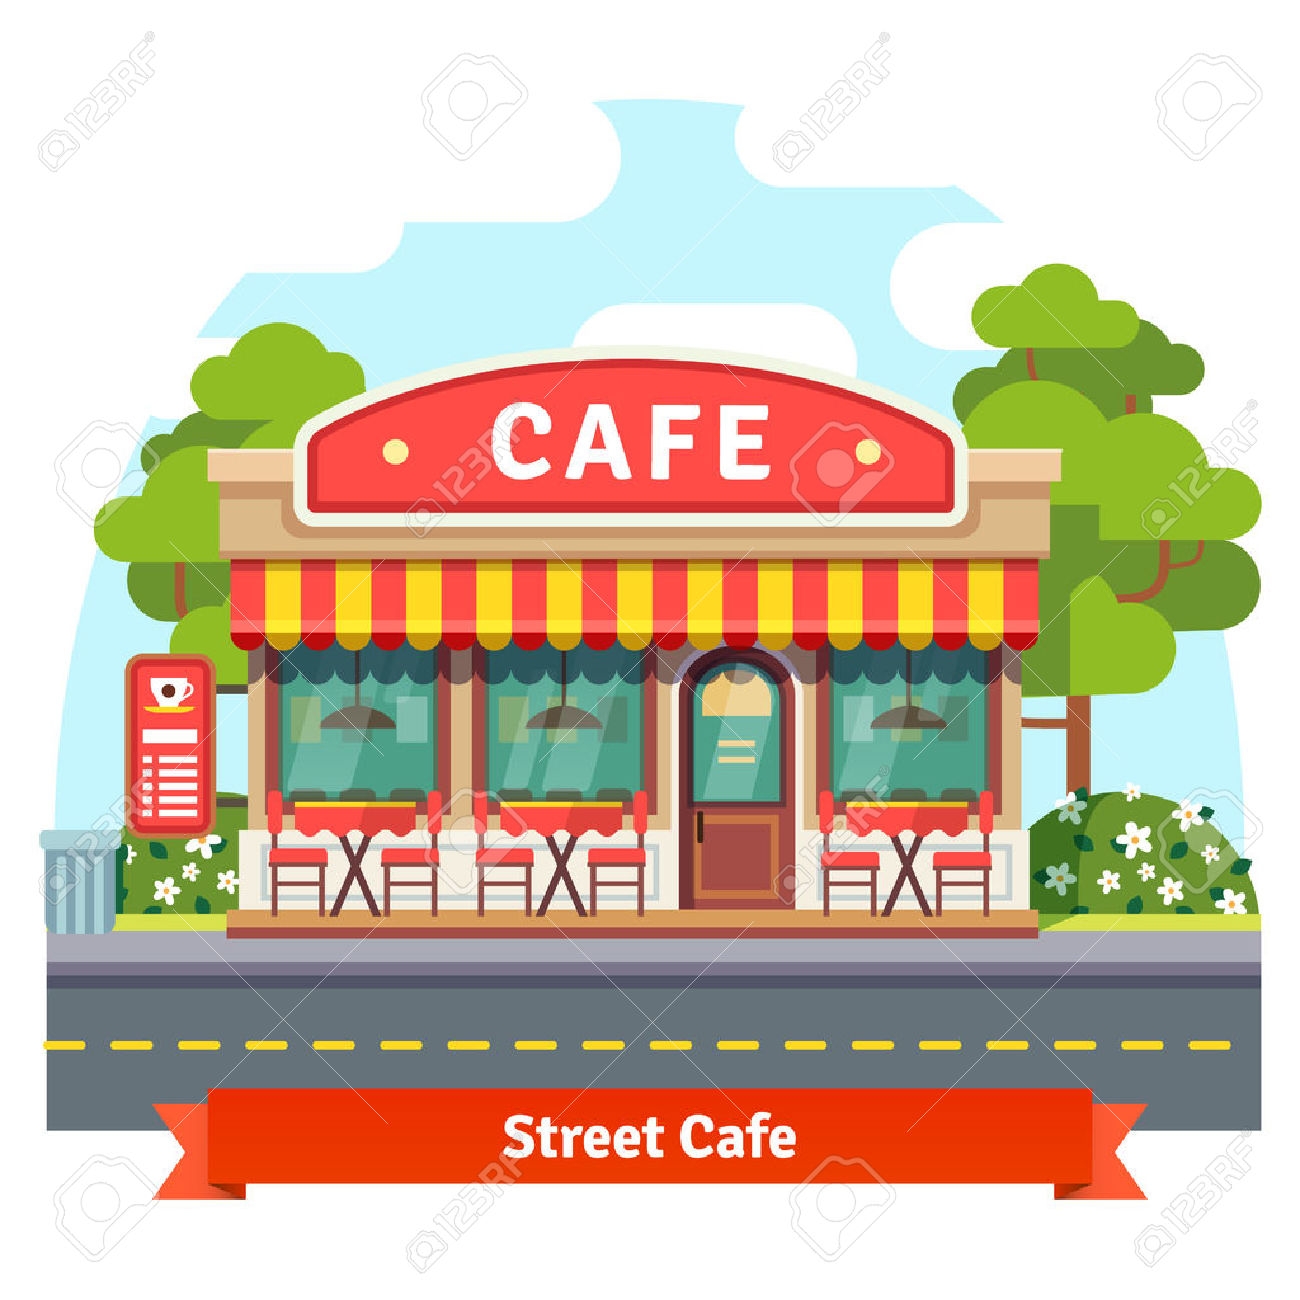 Cafe clipart cafe.